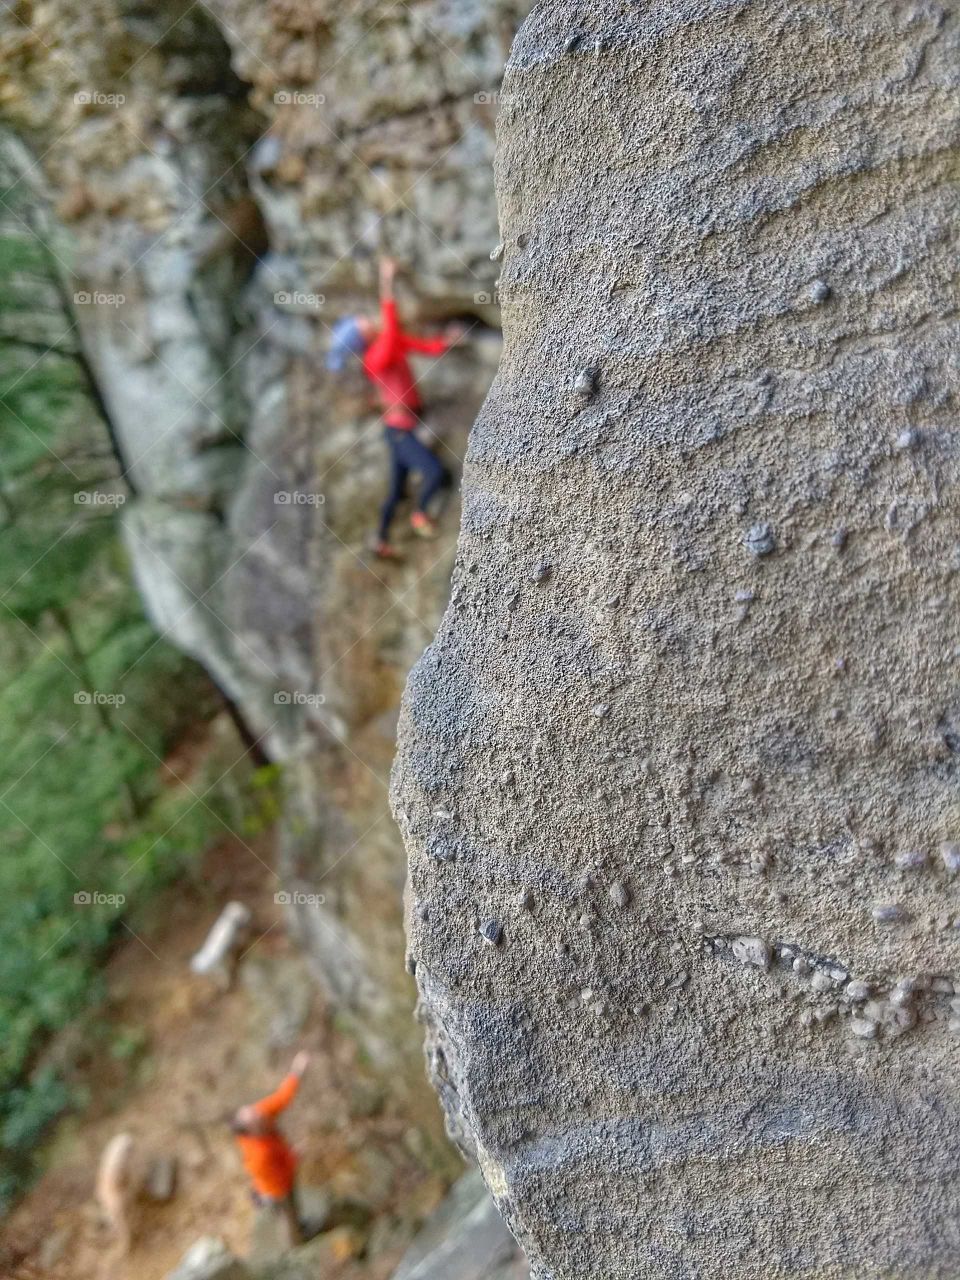 rockclimbing texture